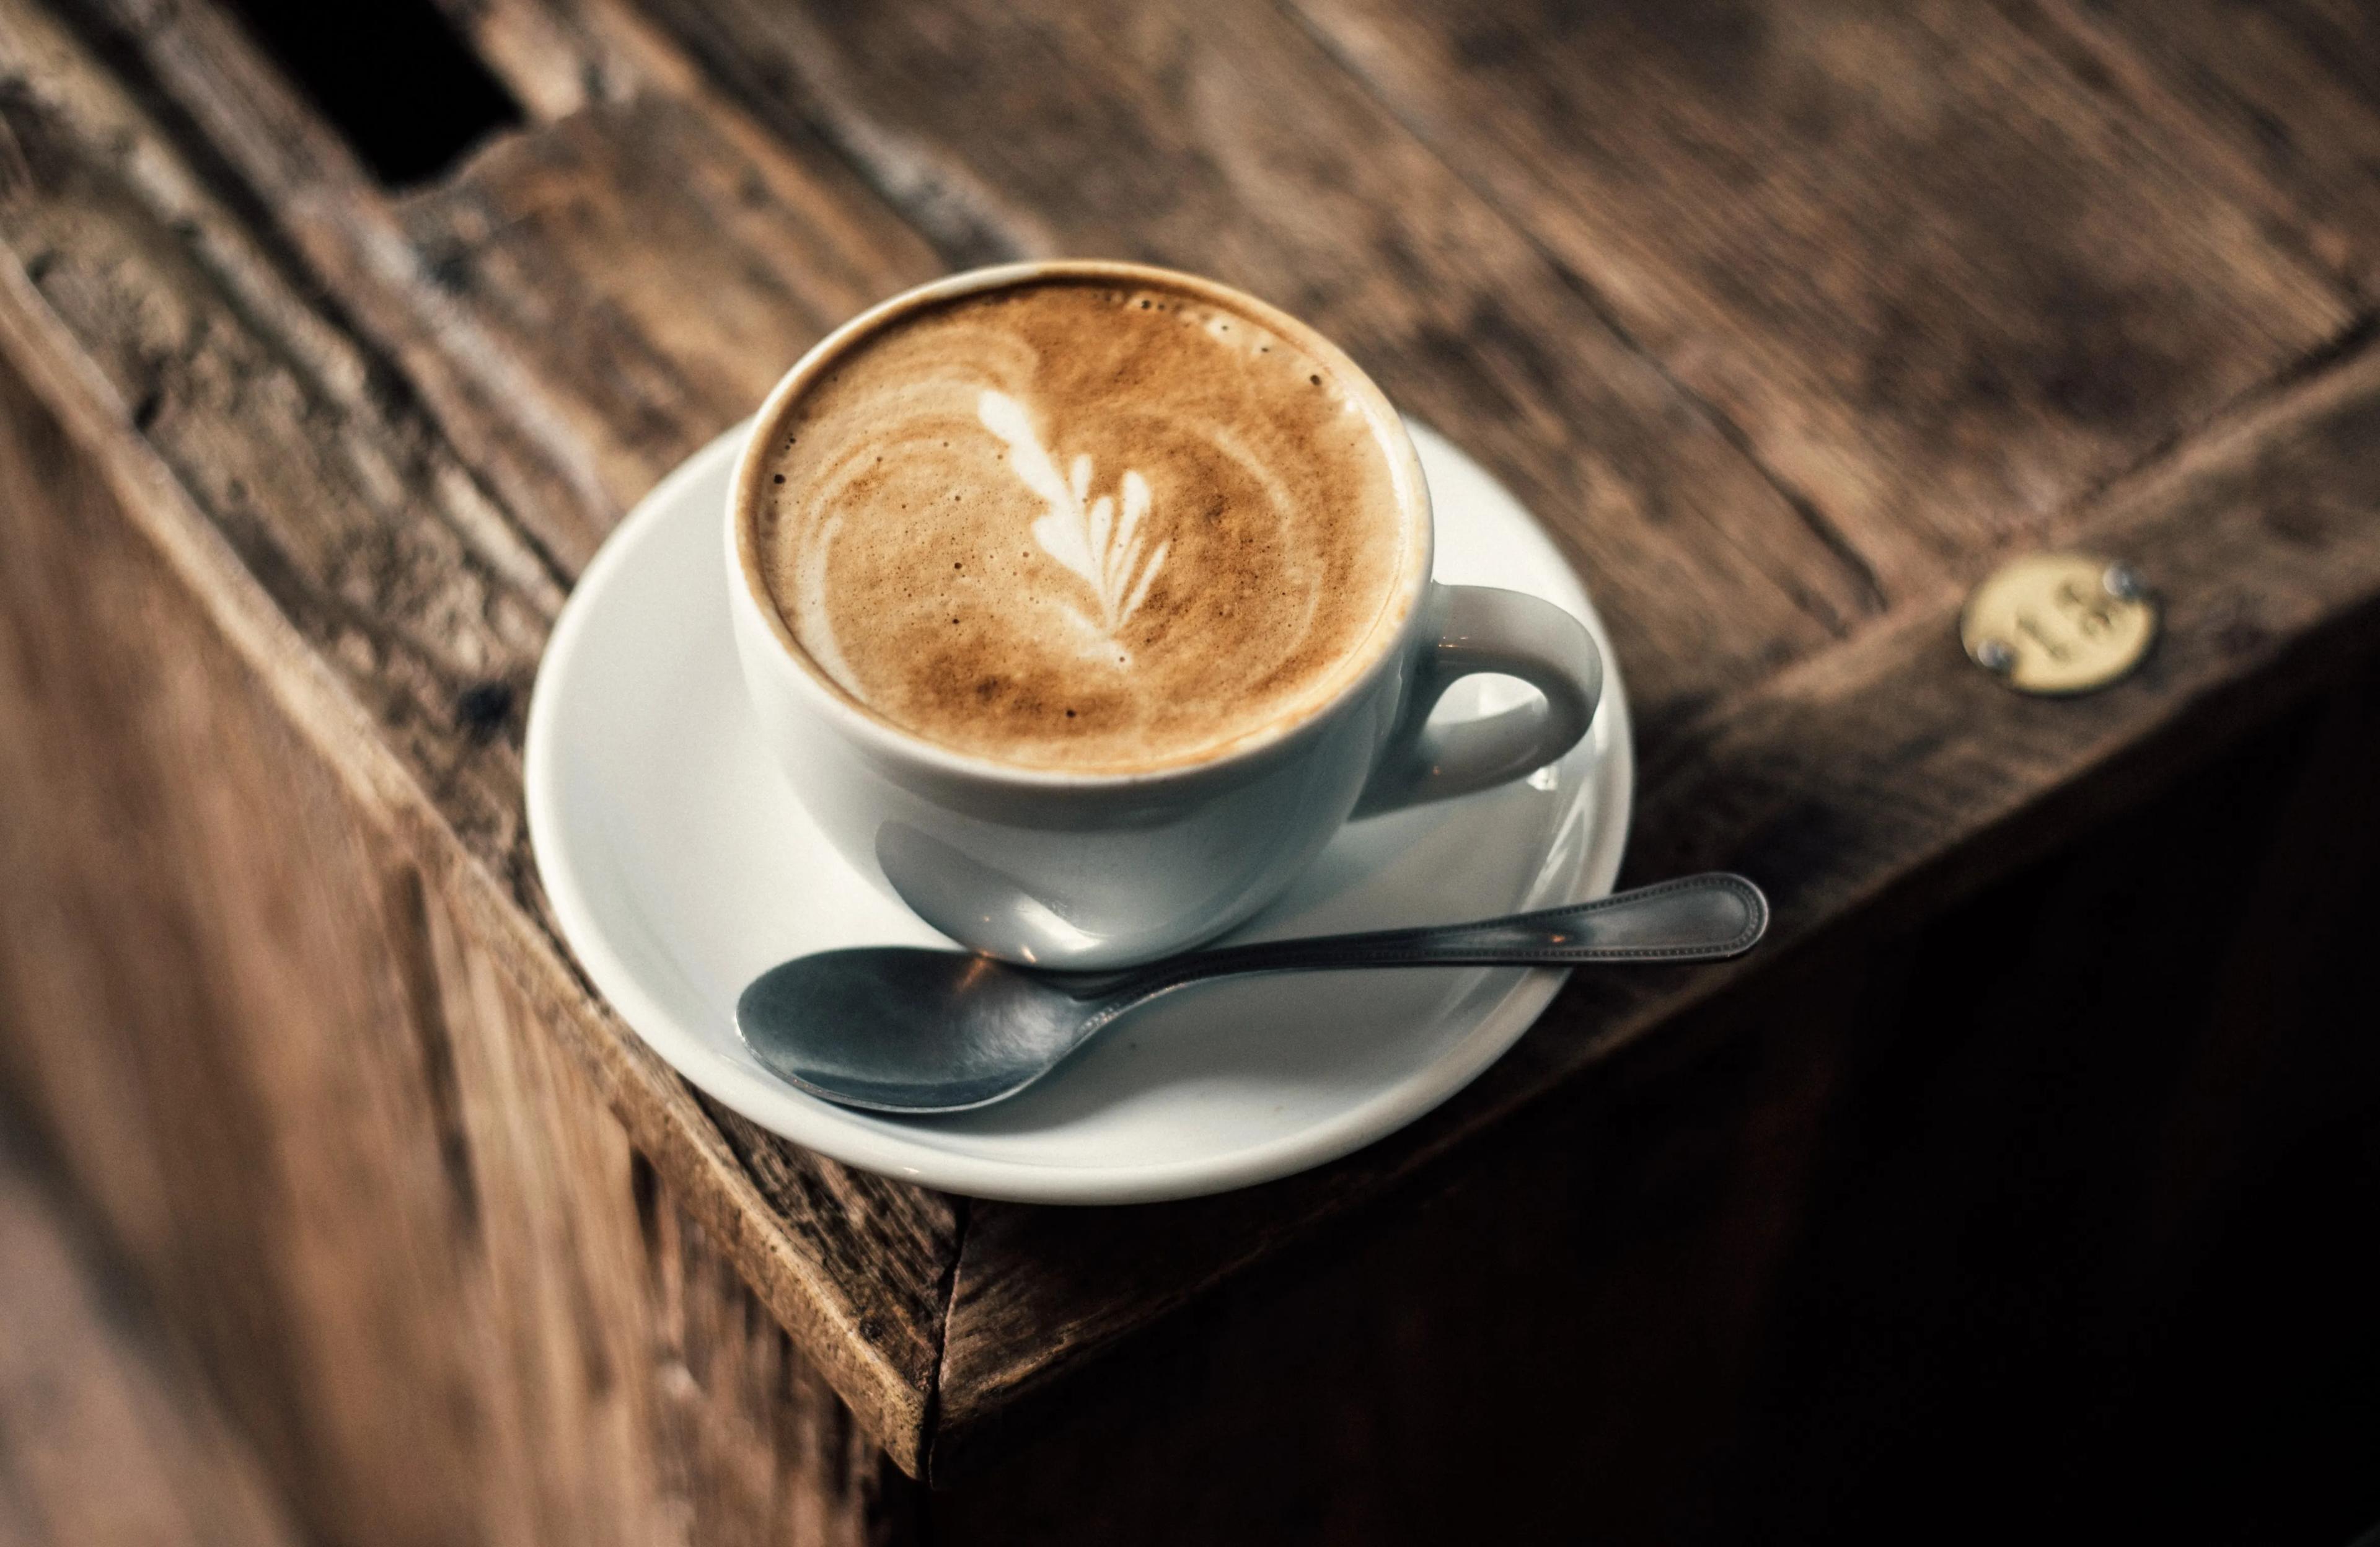 Free Images : morning, foam, latte, cappuccino, drink, breakfast ...